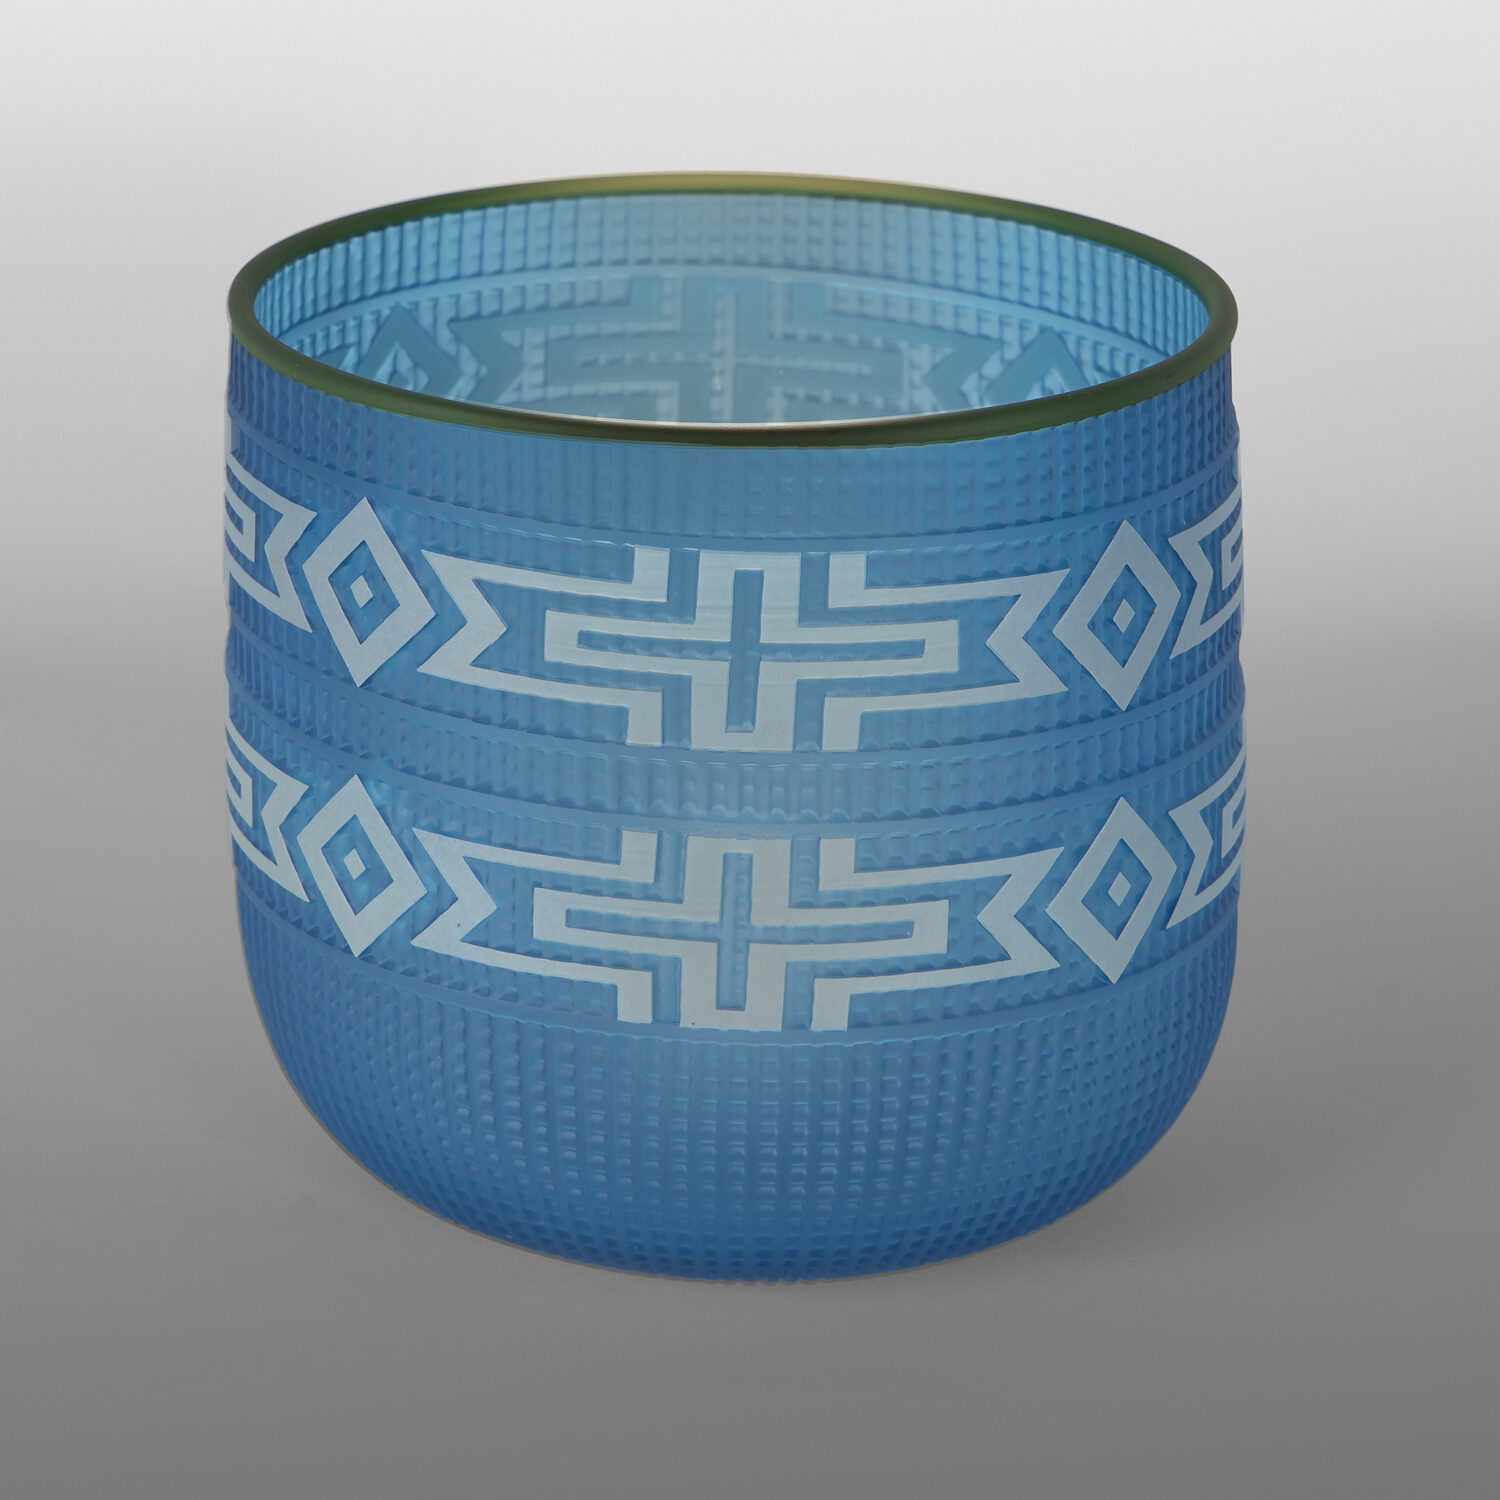 Ocean Green Basket
Preston Singletary
TlingitBlown & sand-carved glass
7 ¼" x 7"
$4500